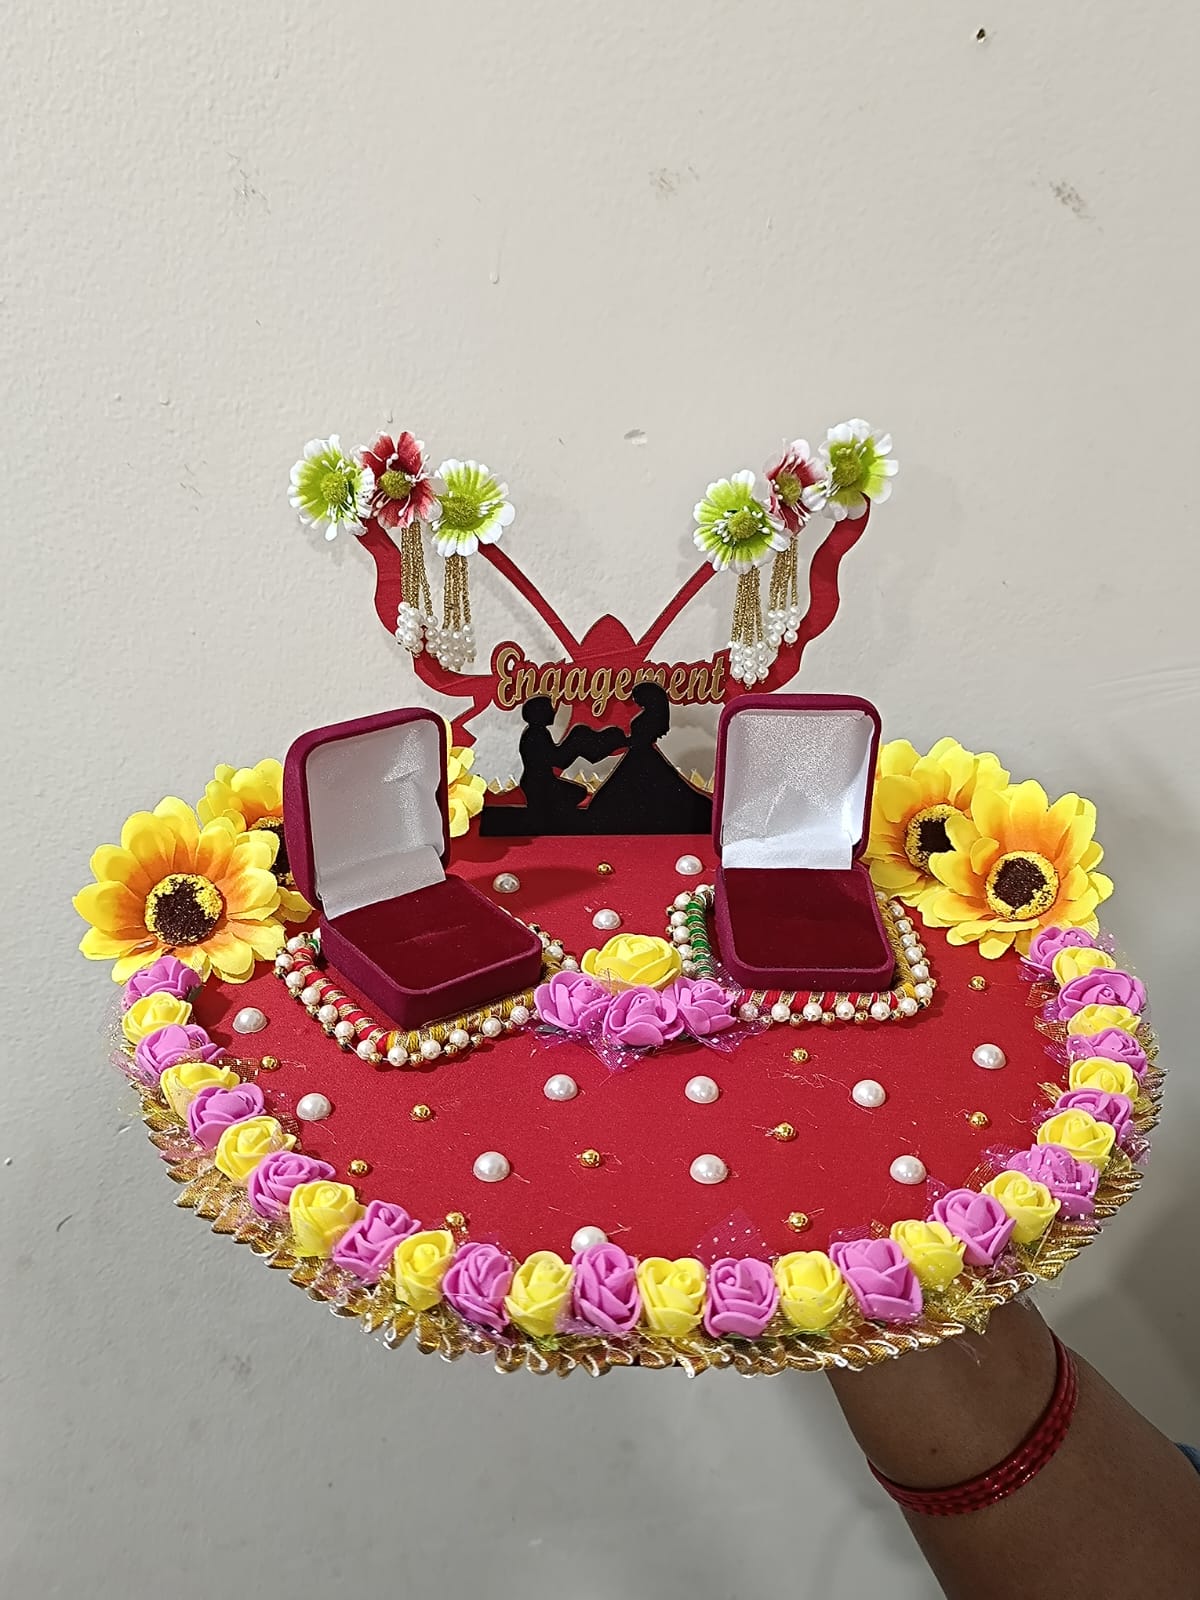 Engagement Ring 4 kg Cake by Cake Square Chennai - Cake Square Chennai |  Cake Shop in Chennai